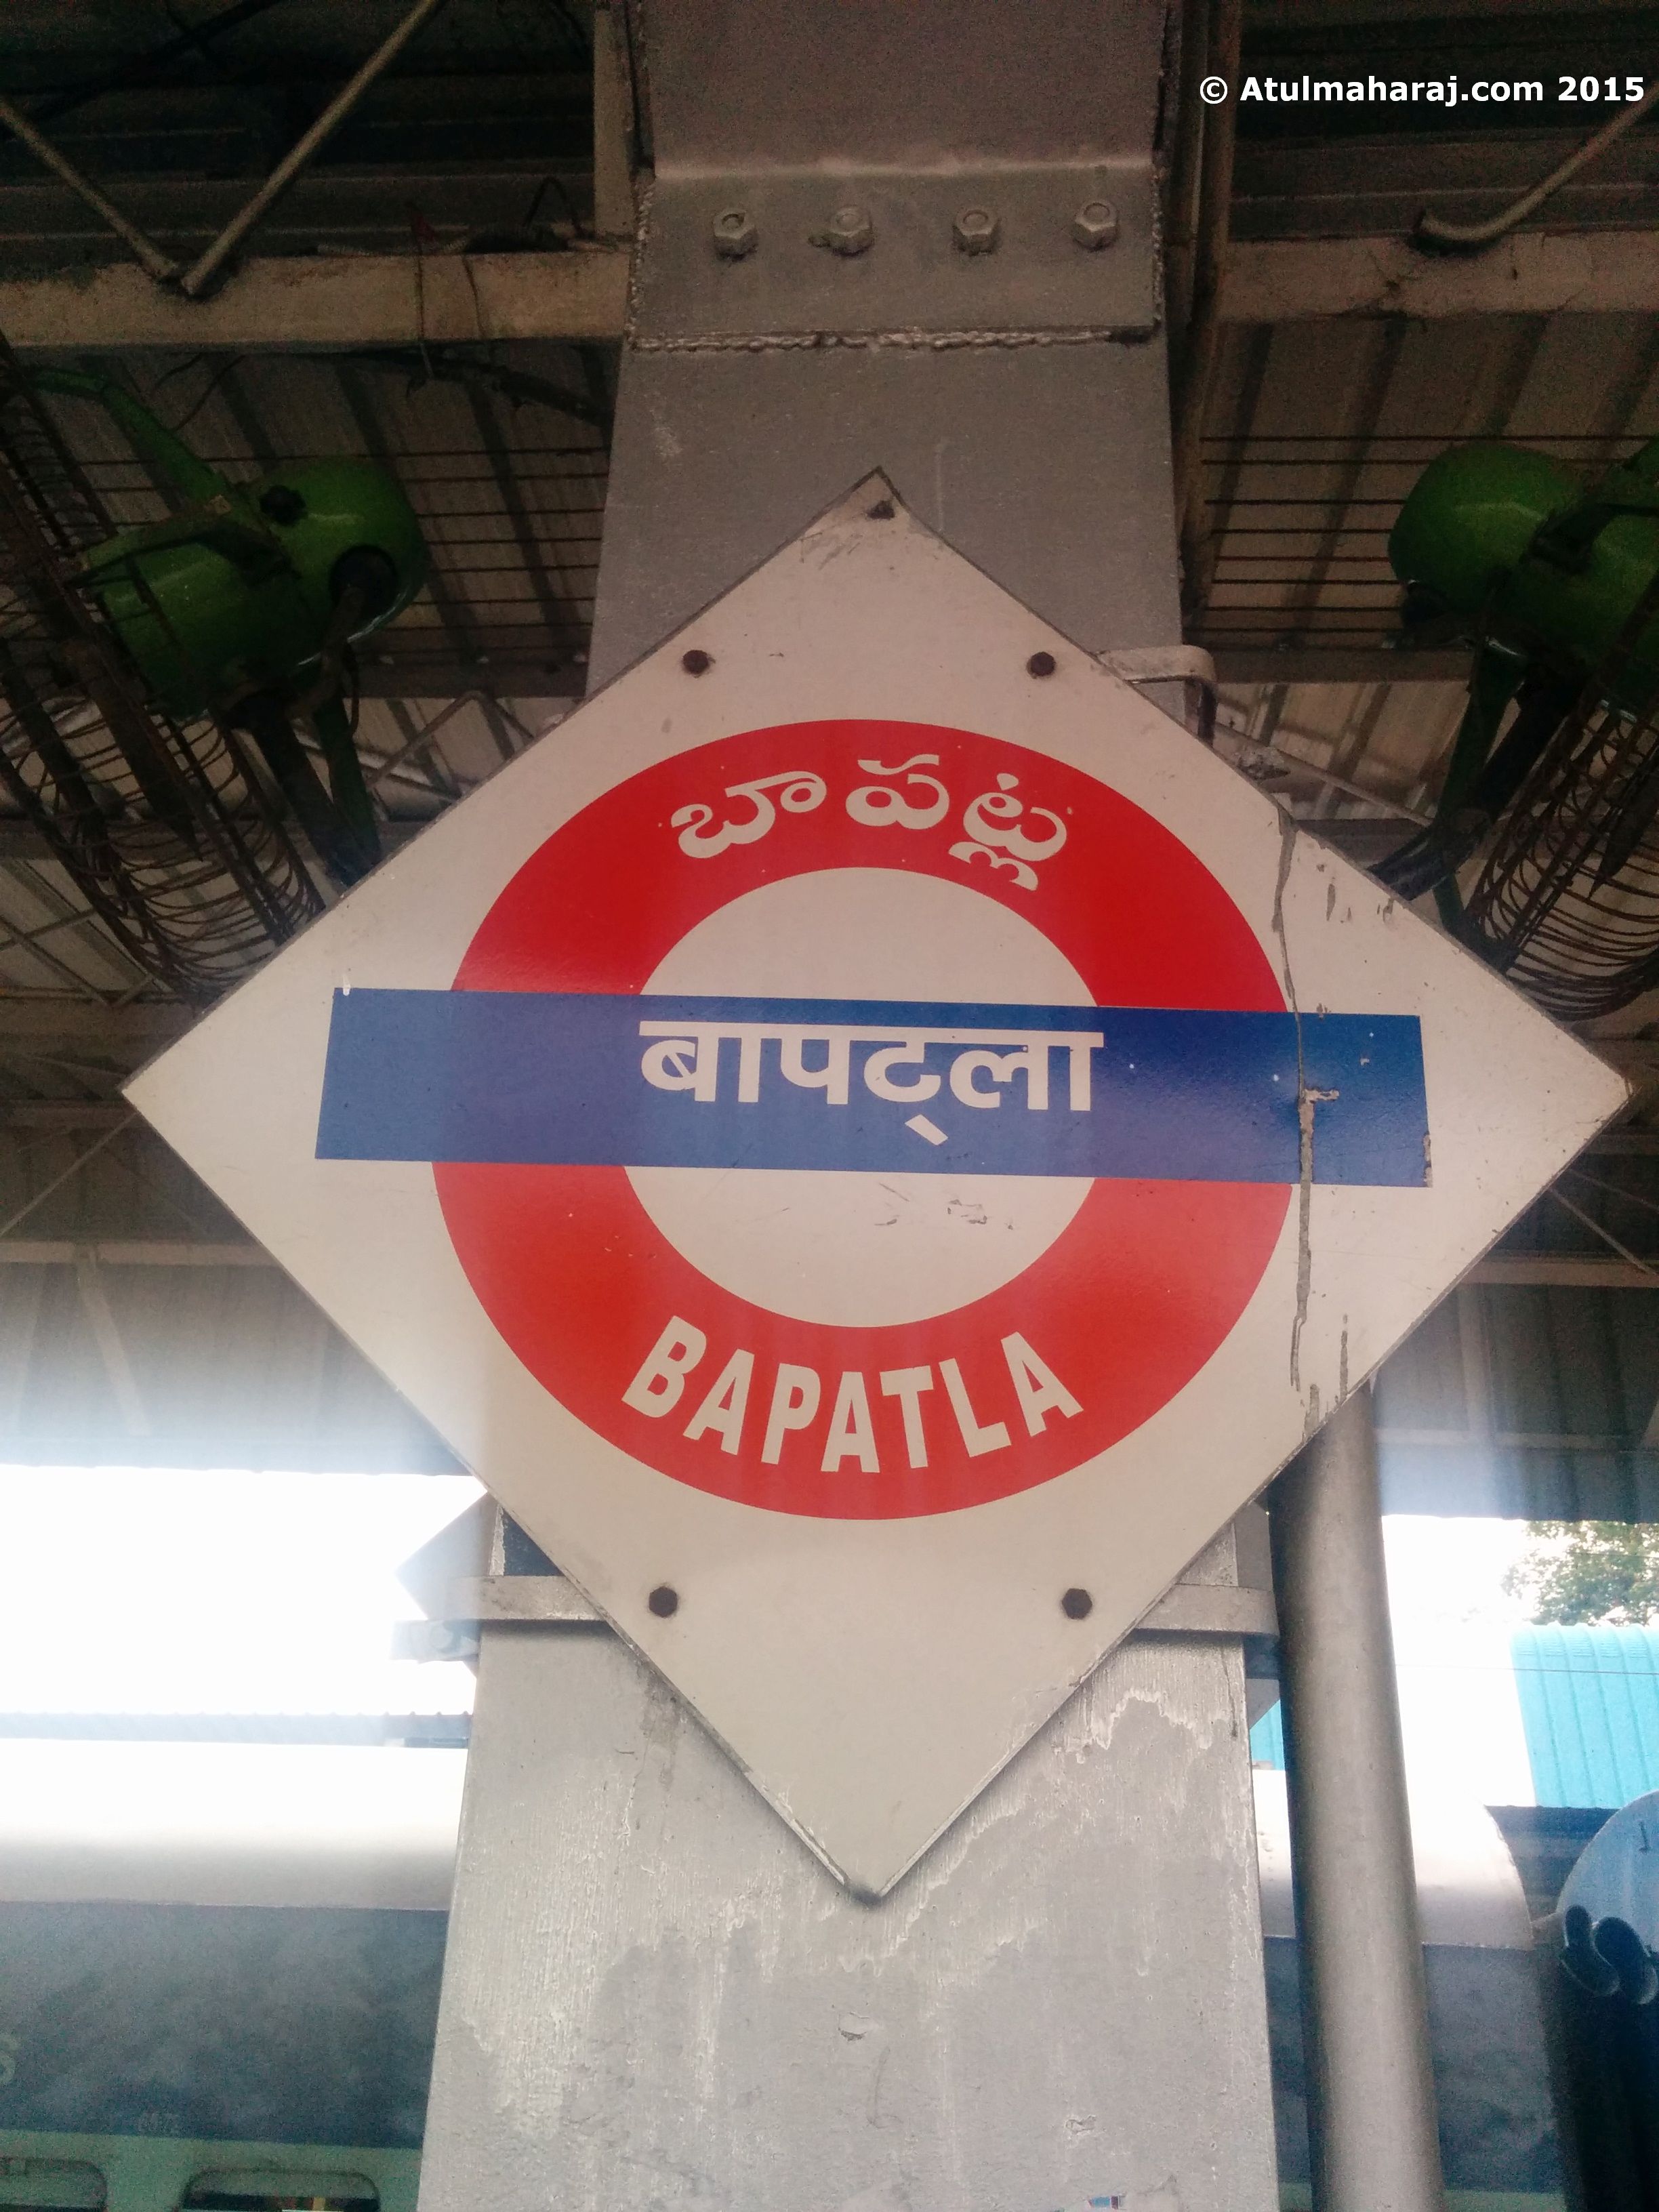 Bapatla Railway Station. Courtesy: Atulmaharaj